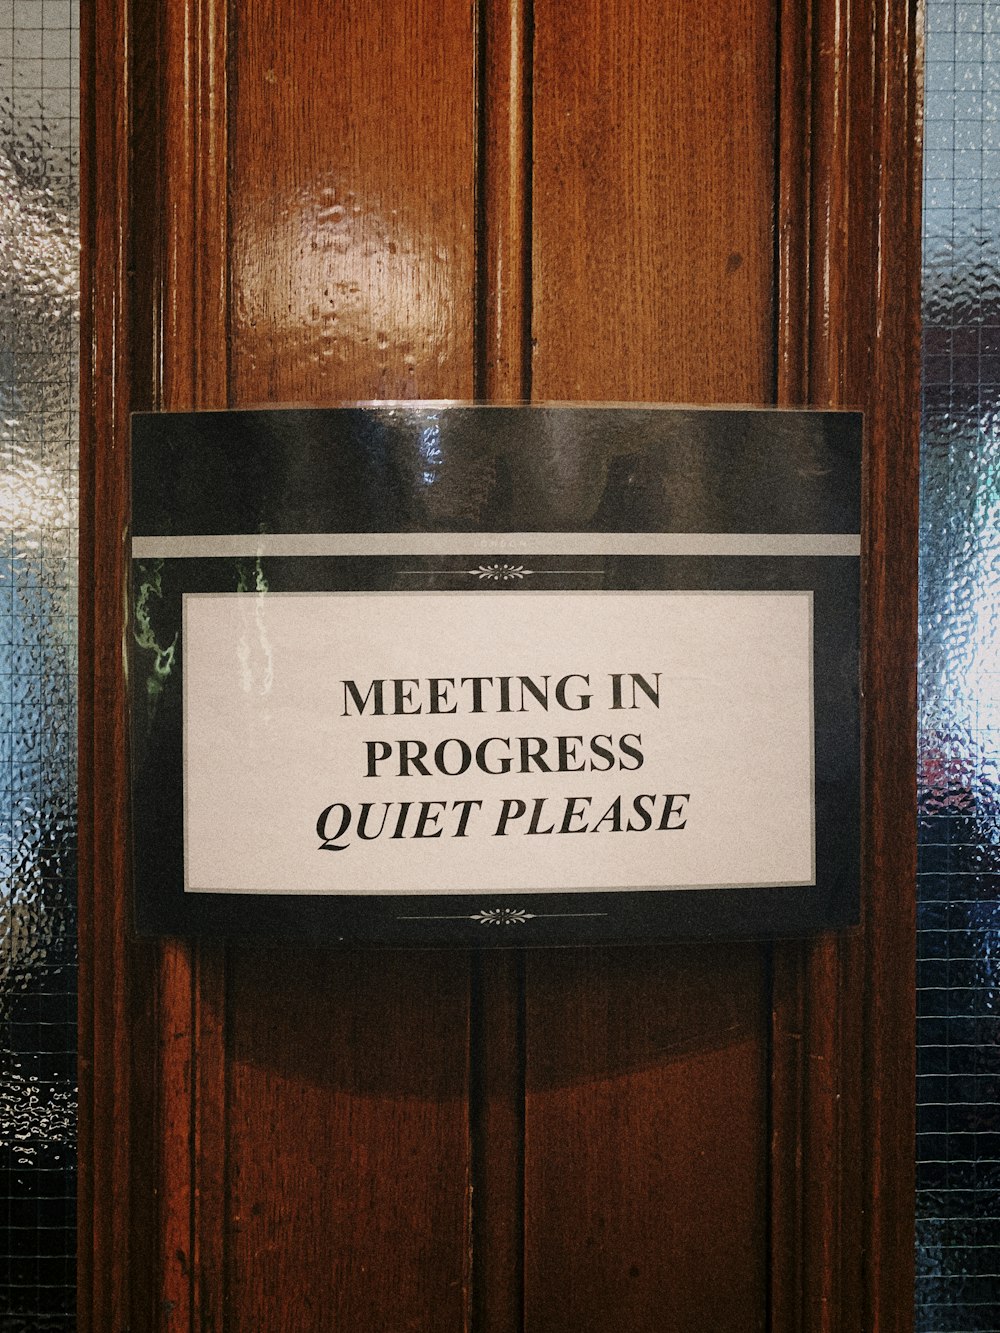 meeting in progress quiet please signage